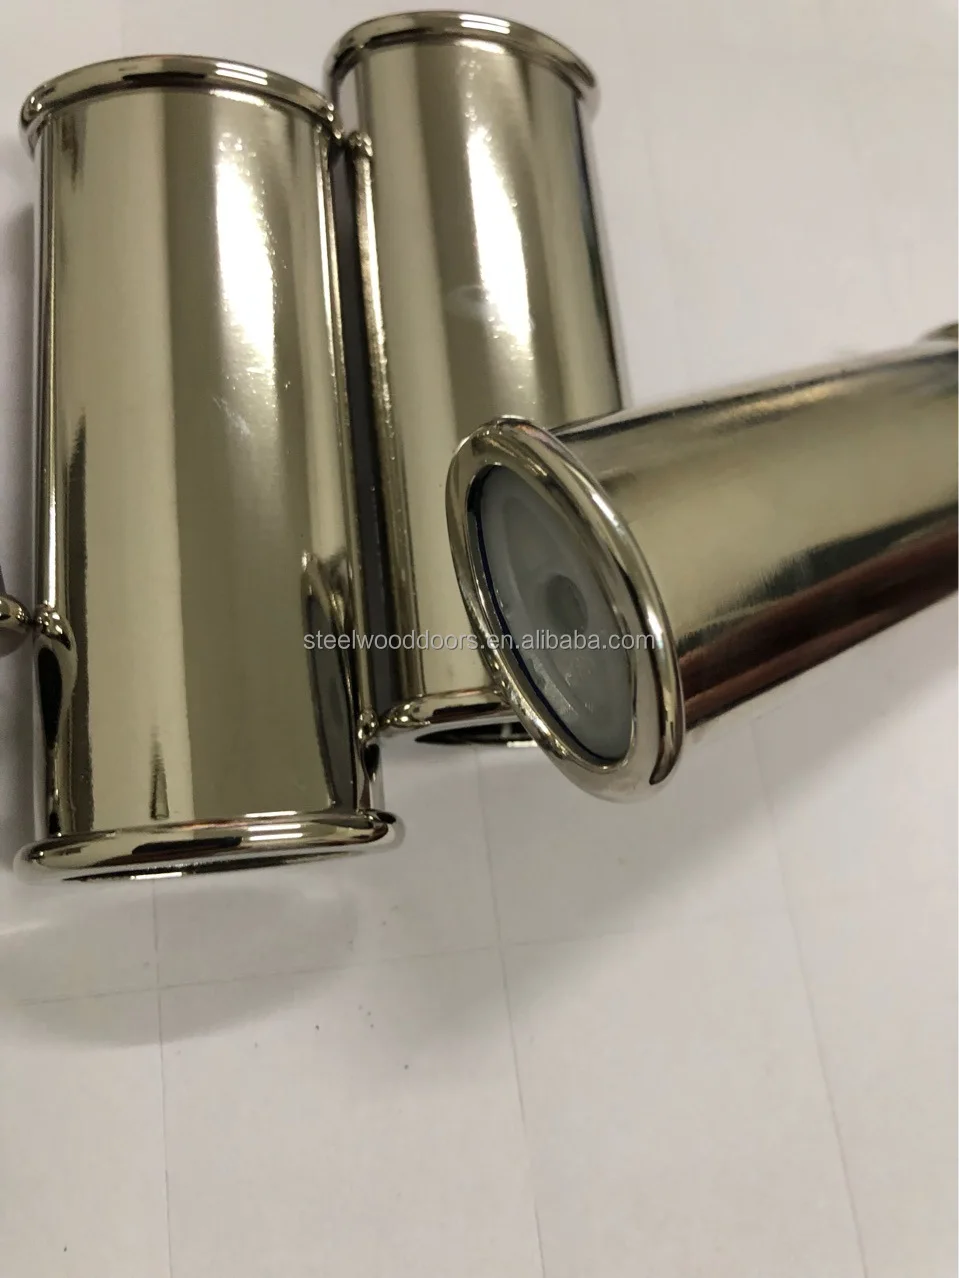 Wholesale Zinc alloy Silver sleeve plain metal cover j6 lighter